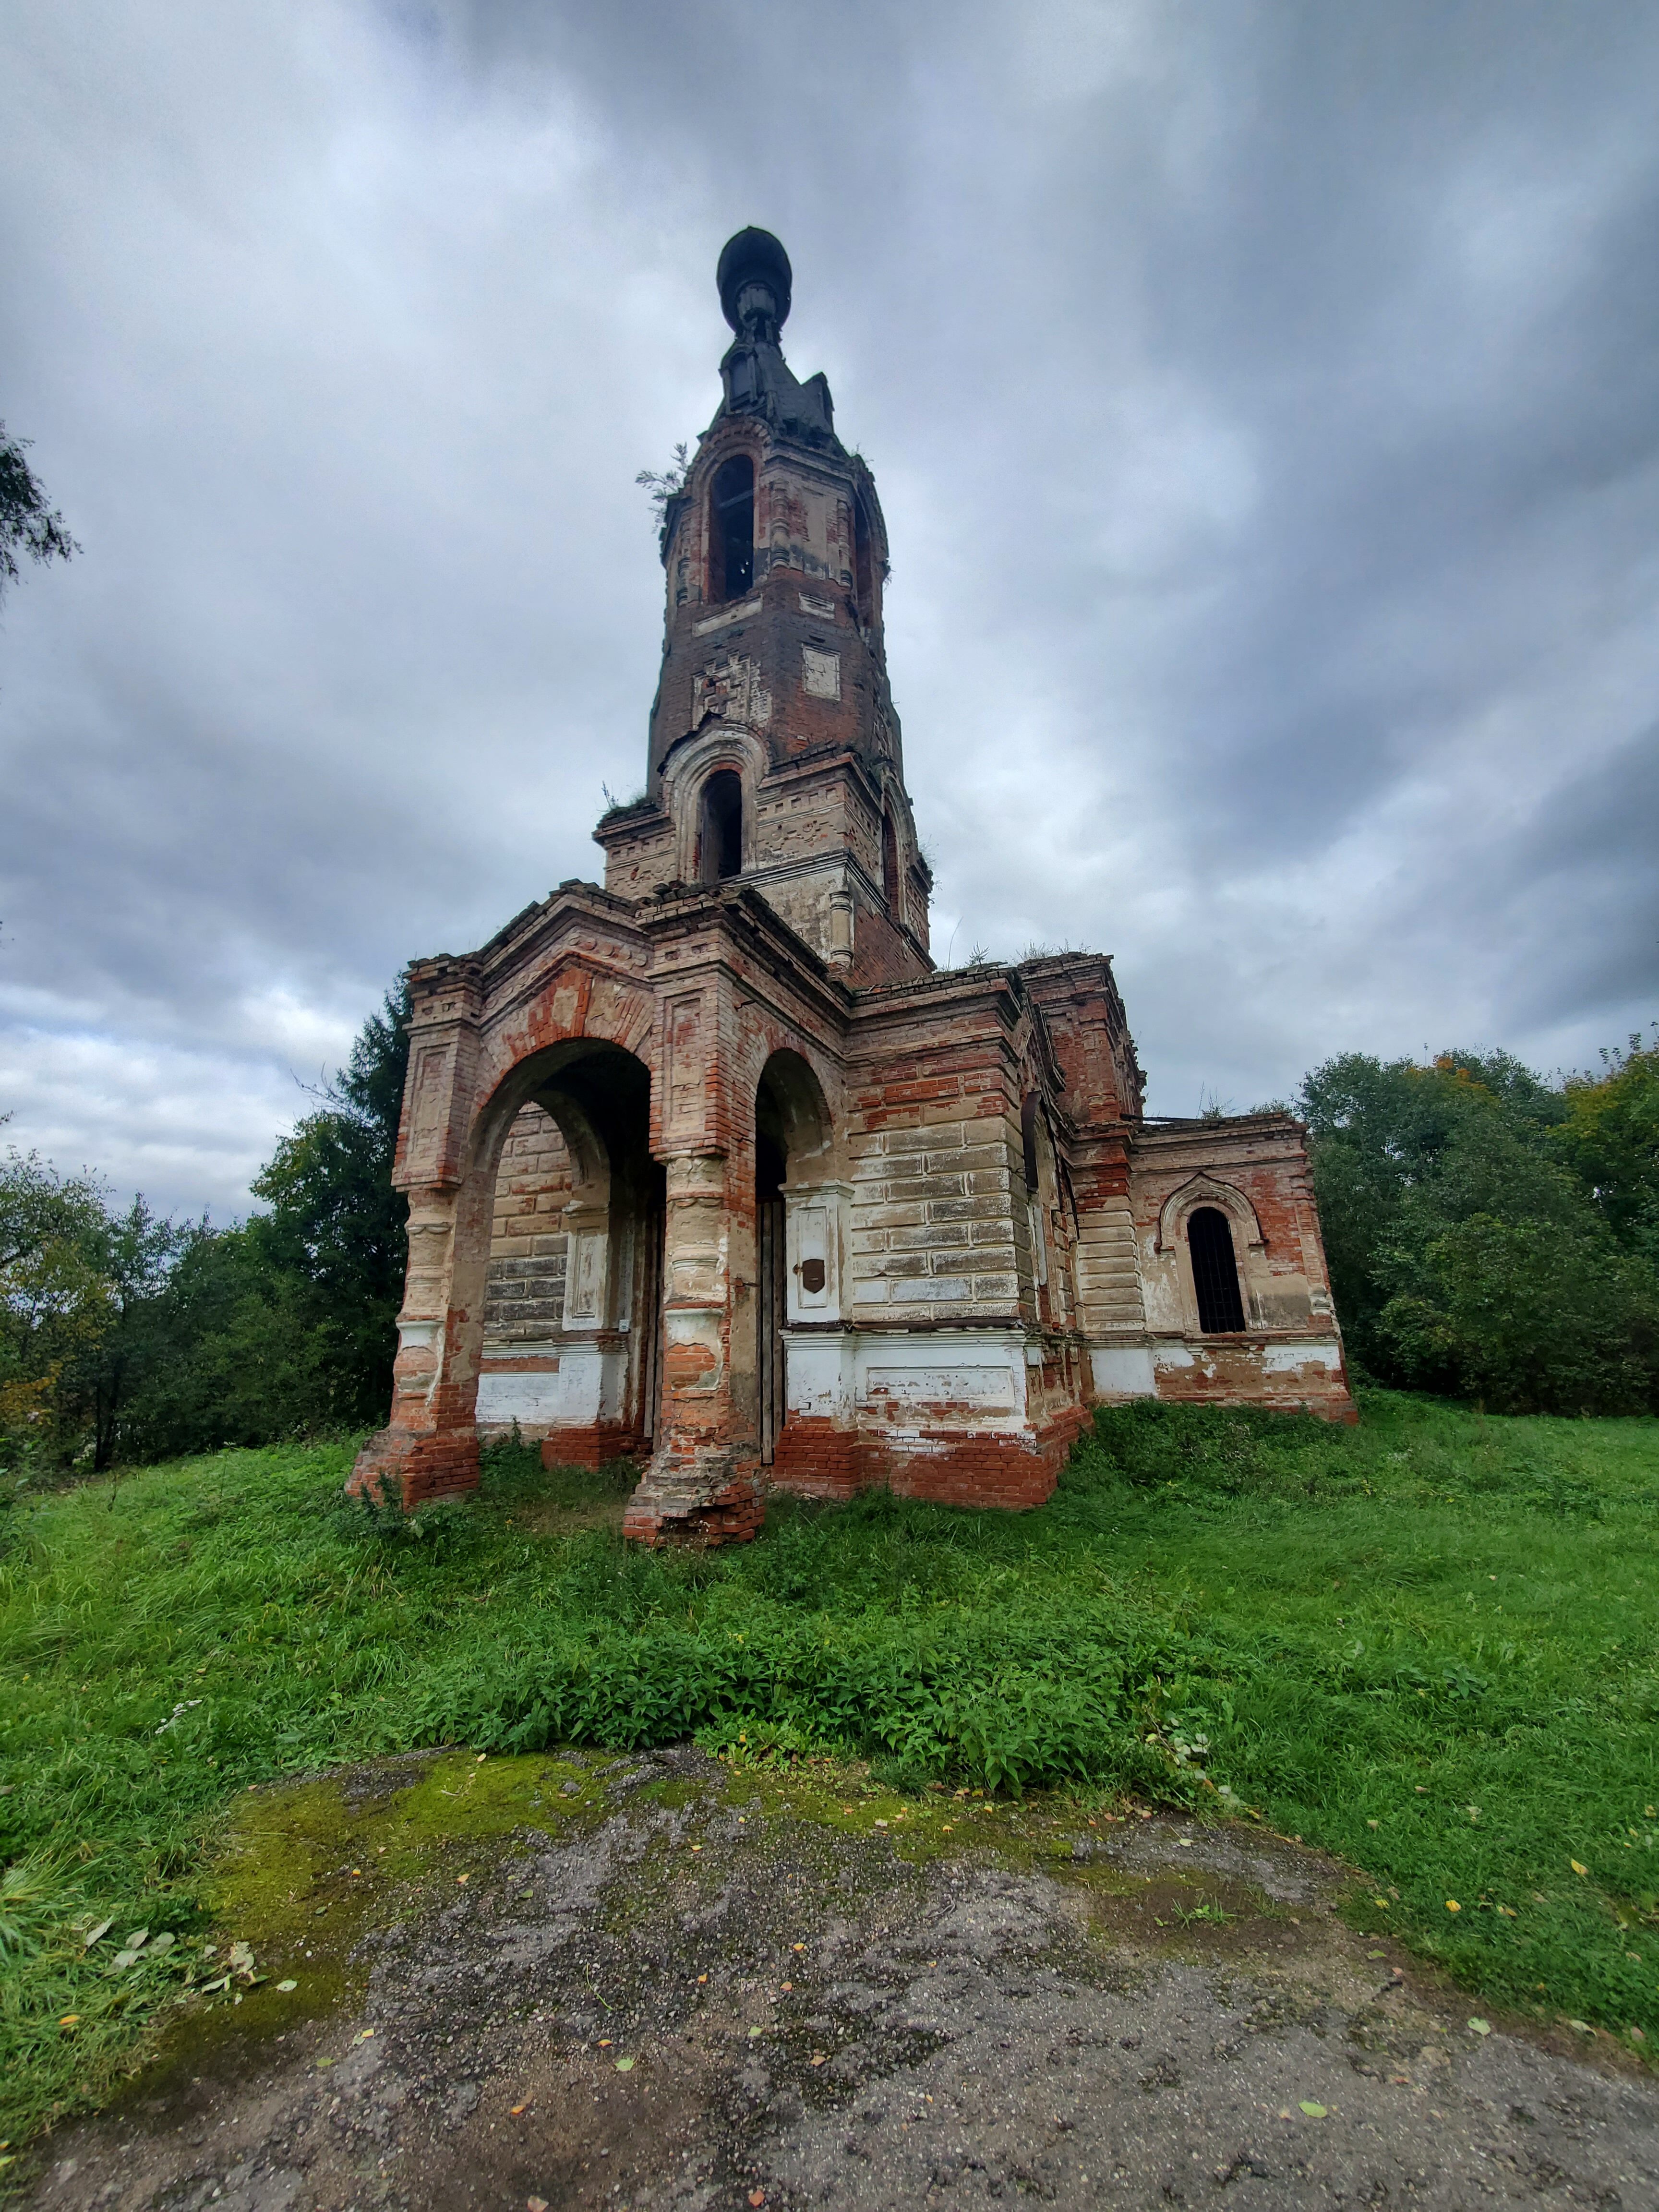 20210926 131207 rotated - Руины храма Святителя Николая Чудотворца в Слободке